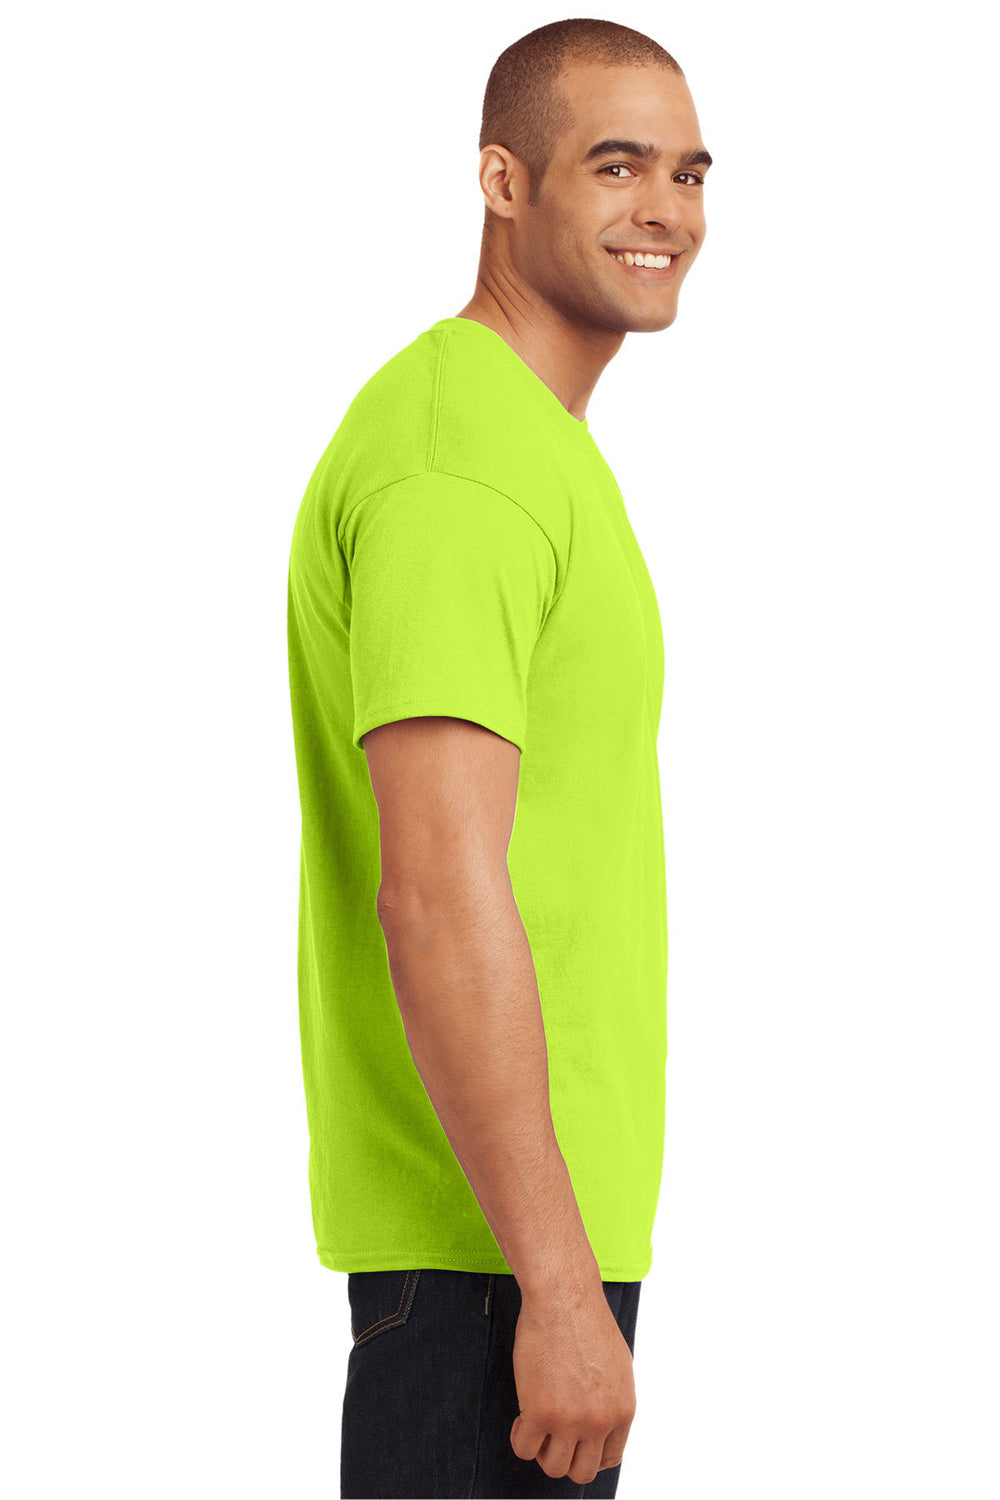 Hanes 5170 Mens EcoSmart Short Sleeve Crewneck T-Shirt Safety Green Side